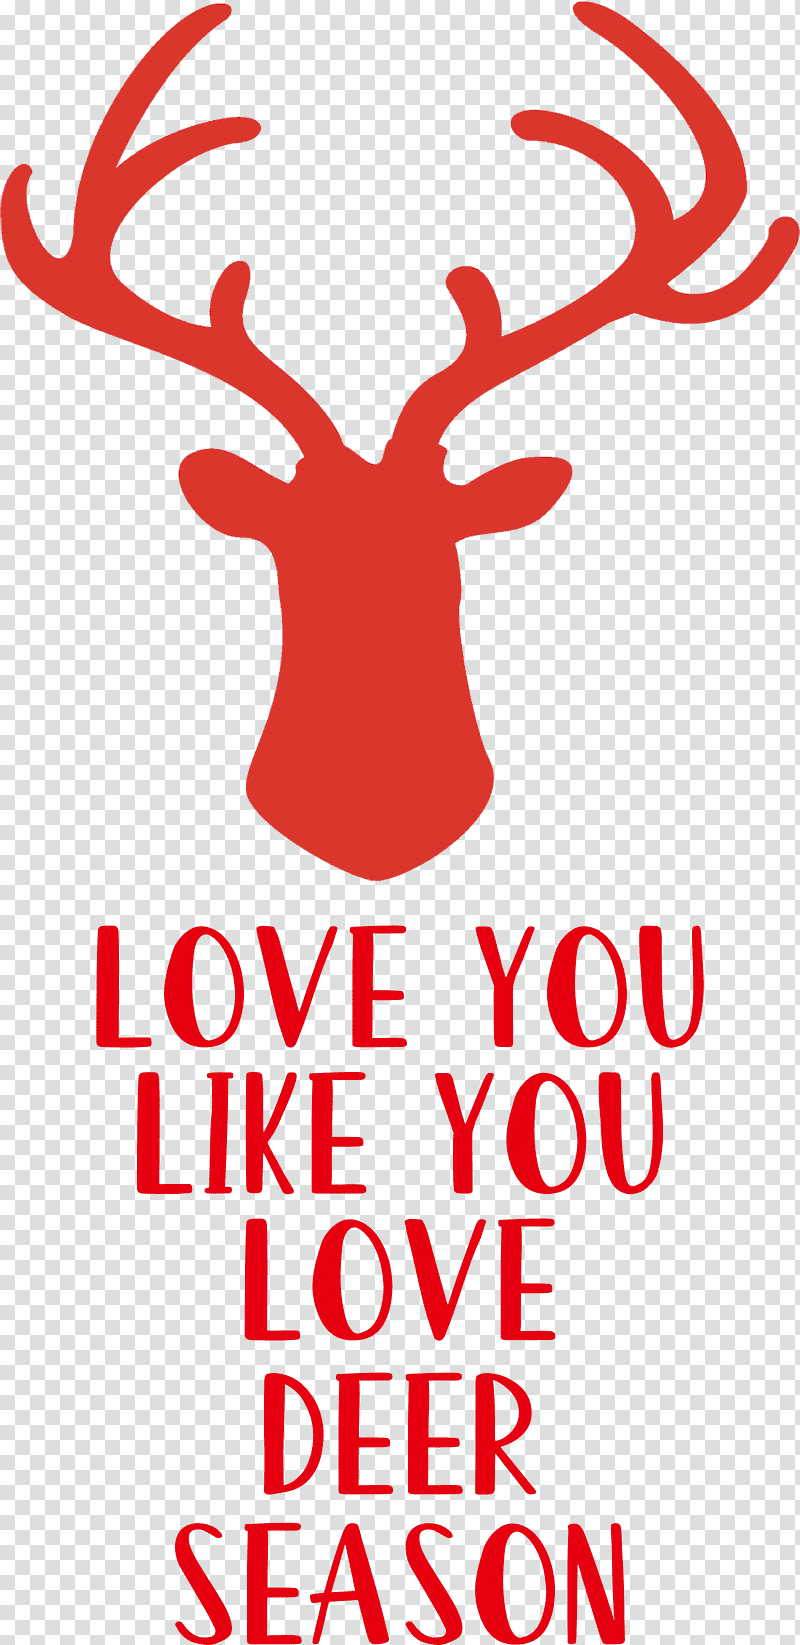 Love Deer Season, Reindeer, Logo, Antler, Meter, Line transparent background PNG clipart